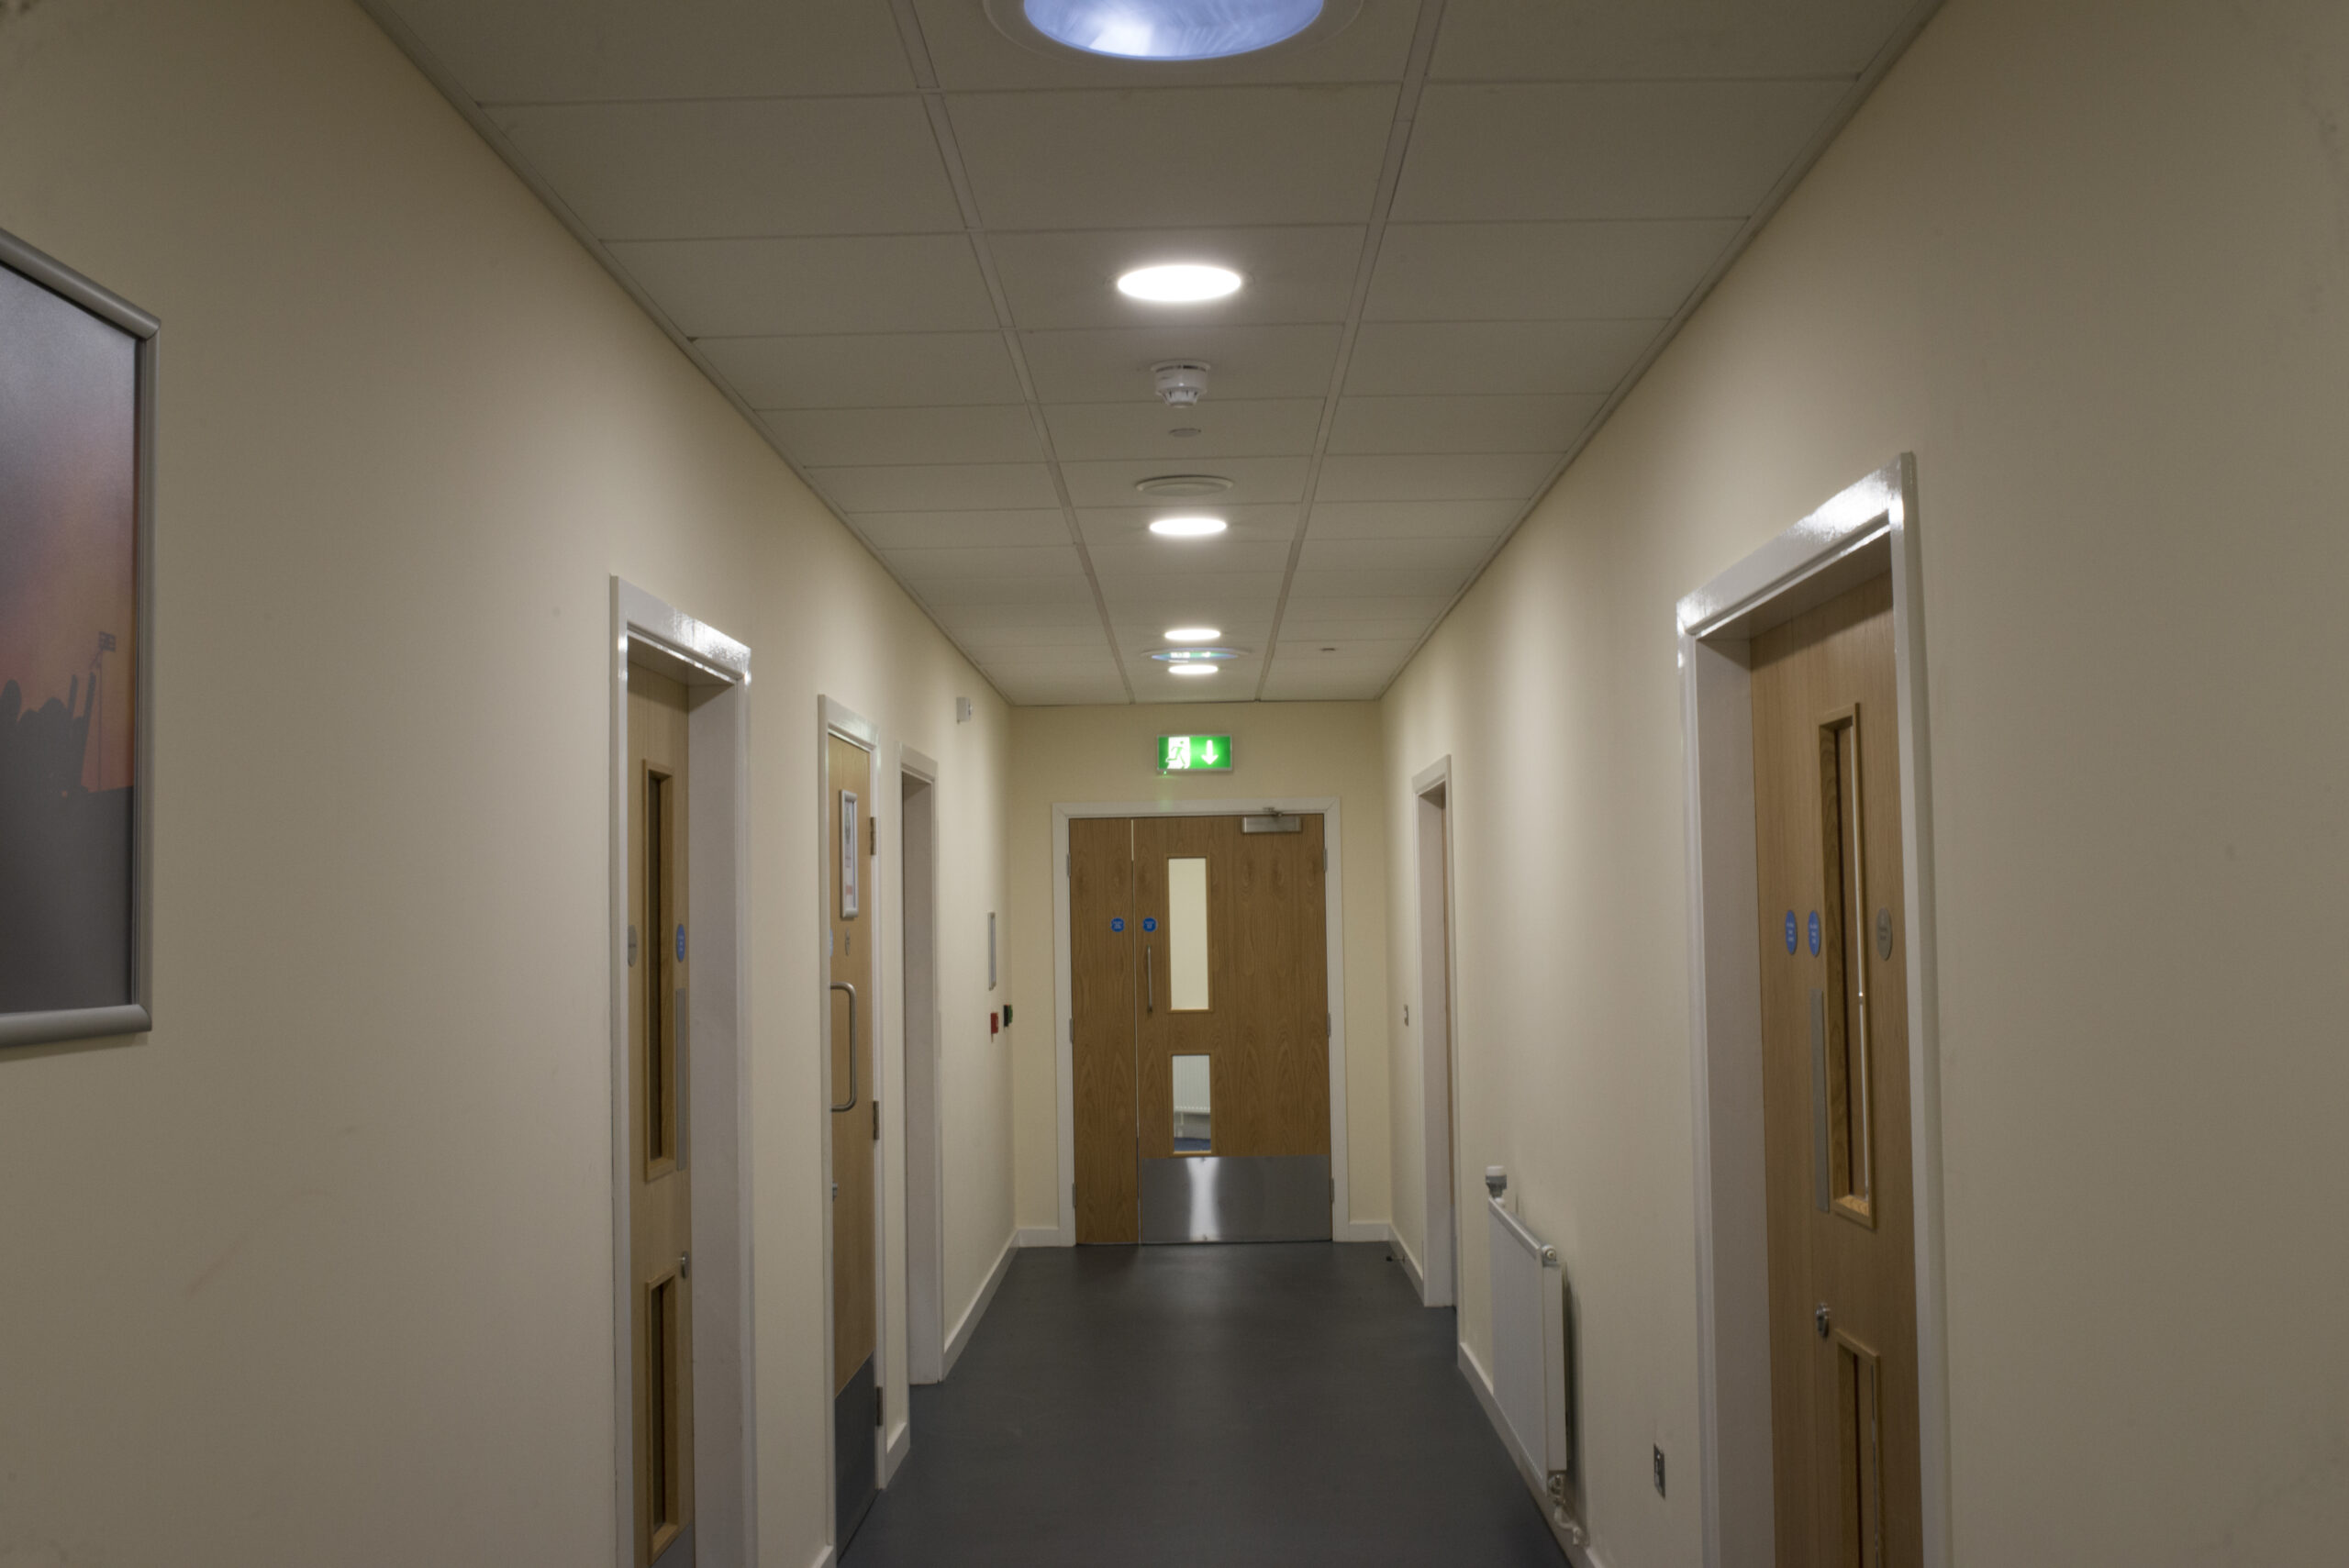 Tamlite Cradley Heath Fire Station emergency hallway LED lighting